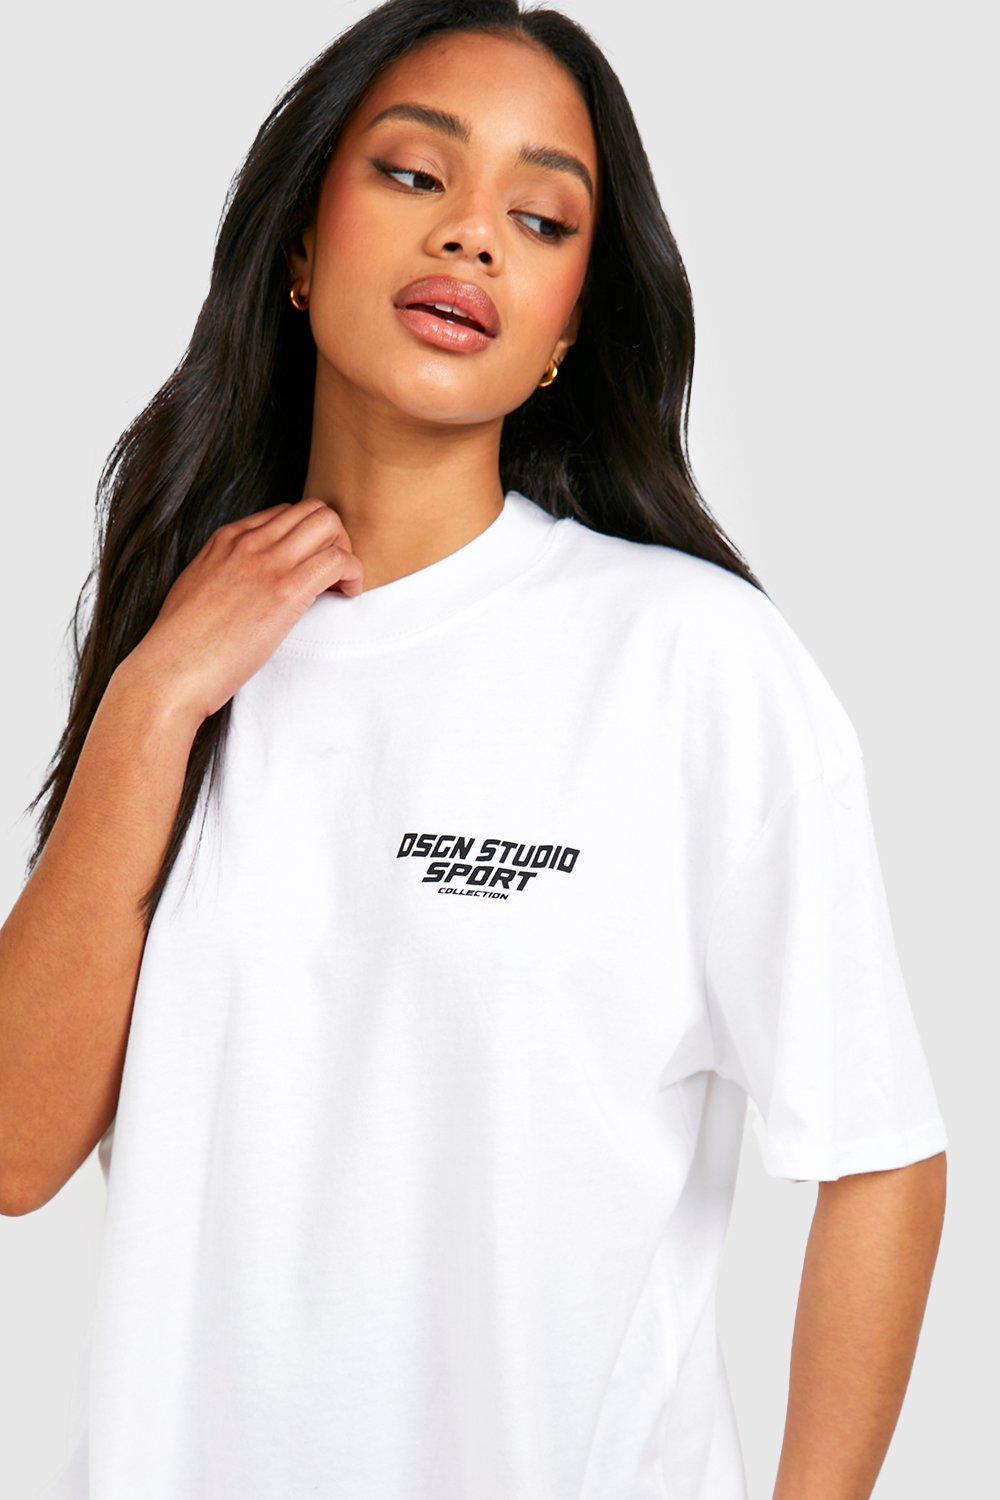 Dsgn Studio Sport Collection Slogan Oversized T-Shirt | boohoo